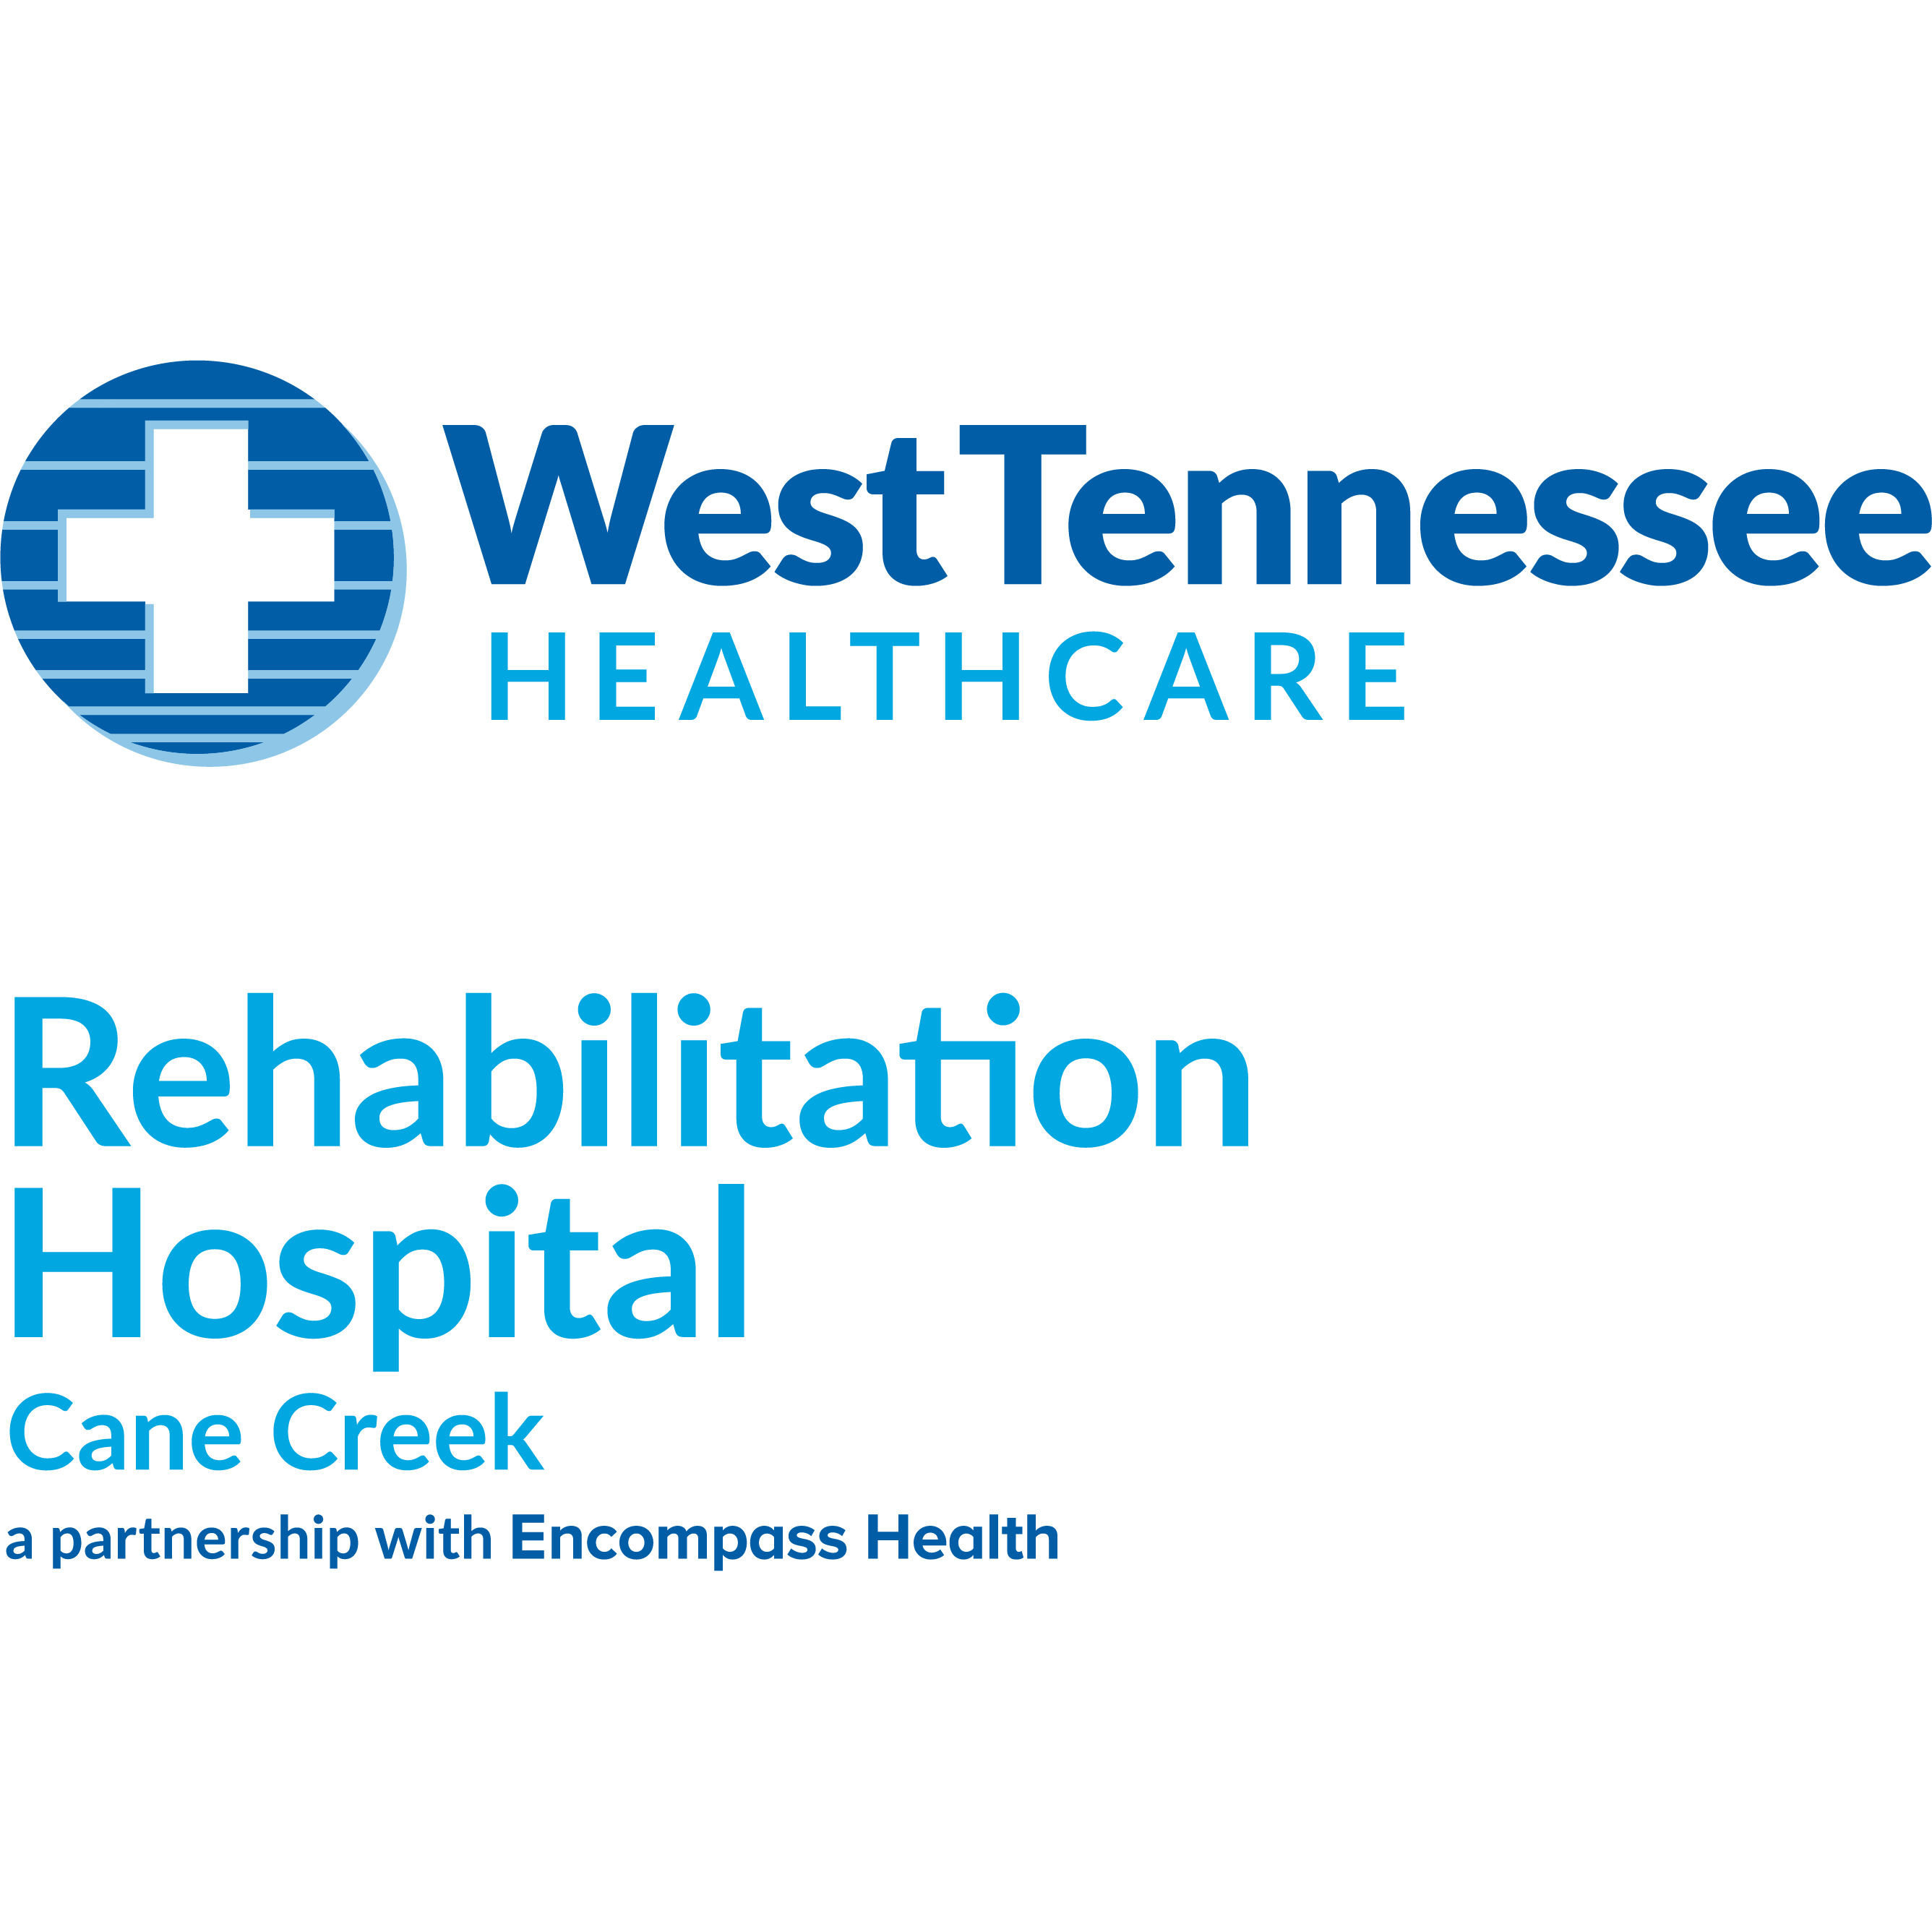 West Tennessee Healthcare Rehabilitation Hospital Cane Creek